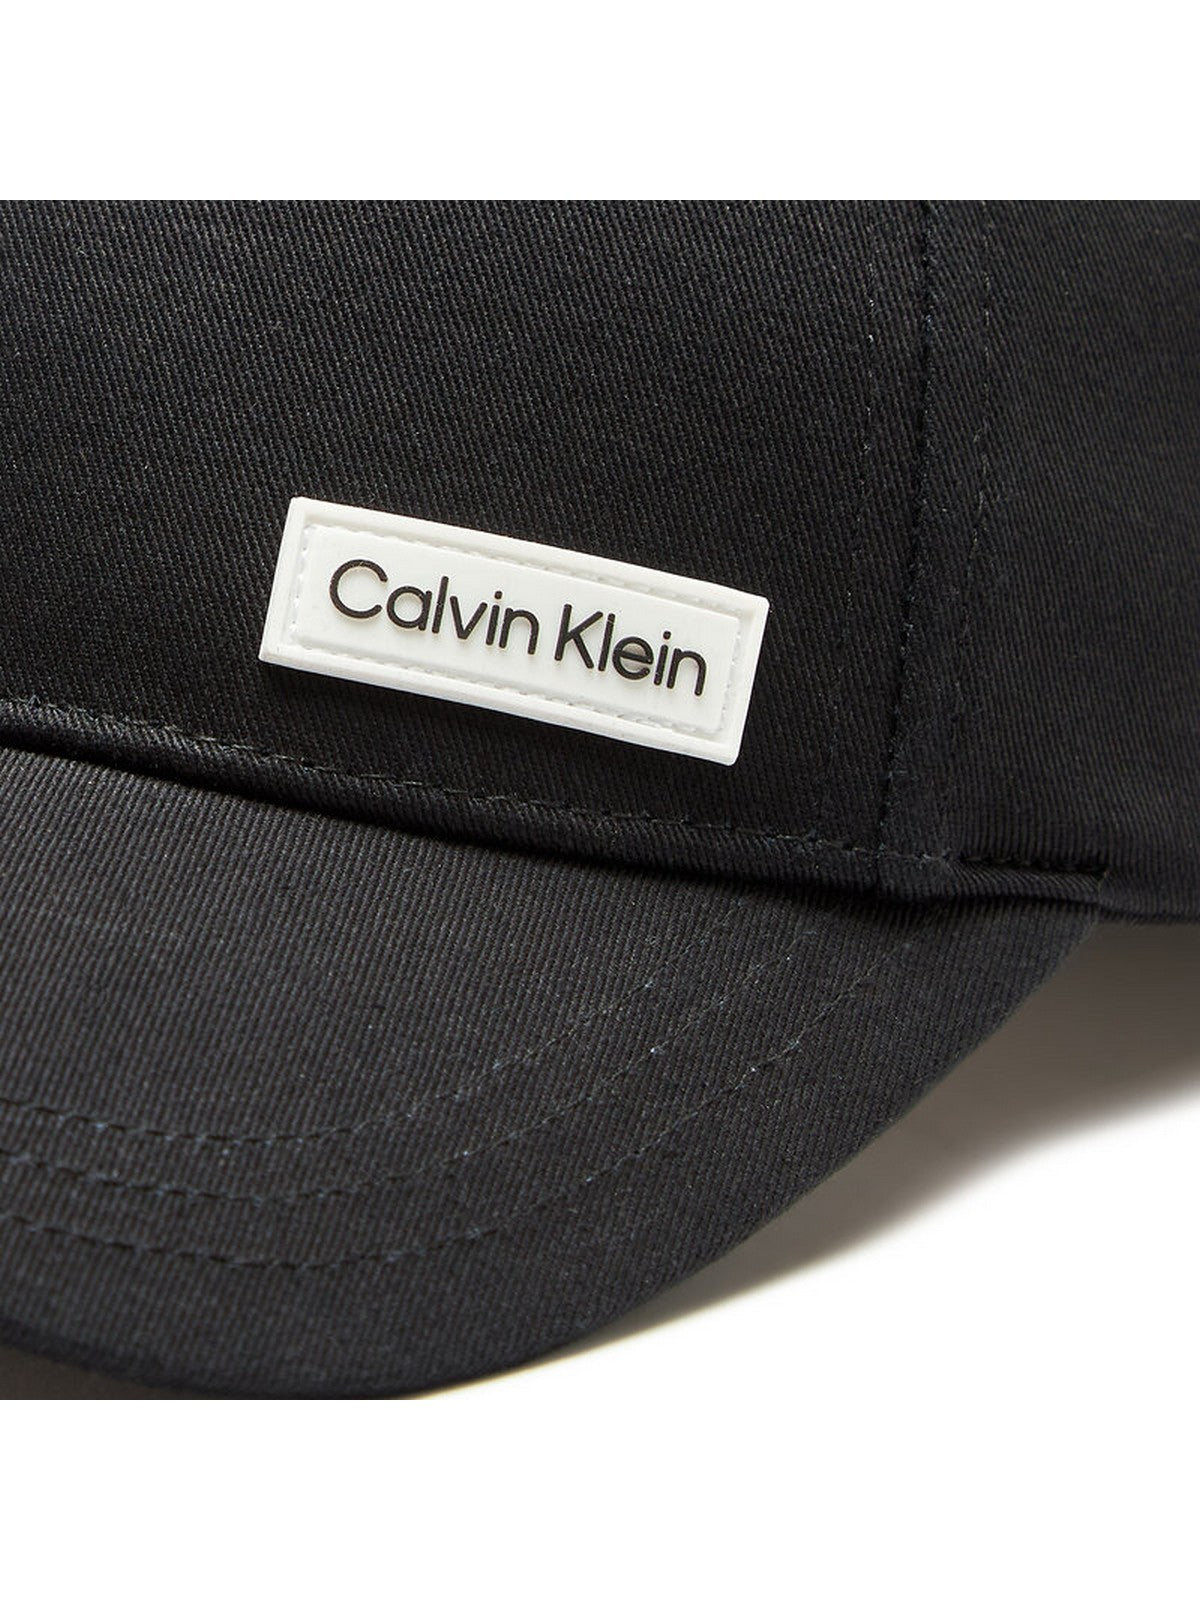 CALVIN KLEIN Cappello Uomo  K50K510651 BAX Nero